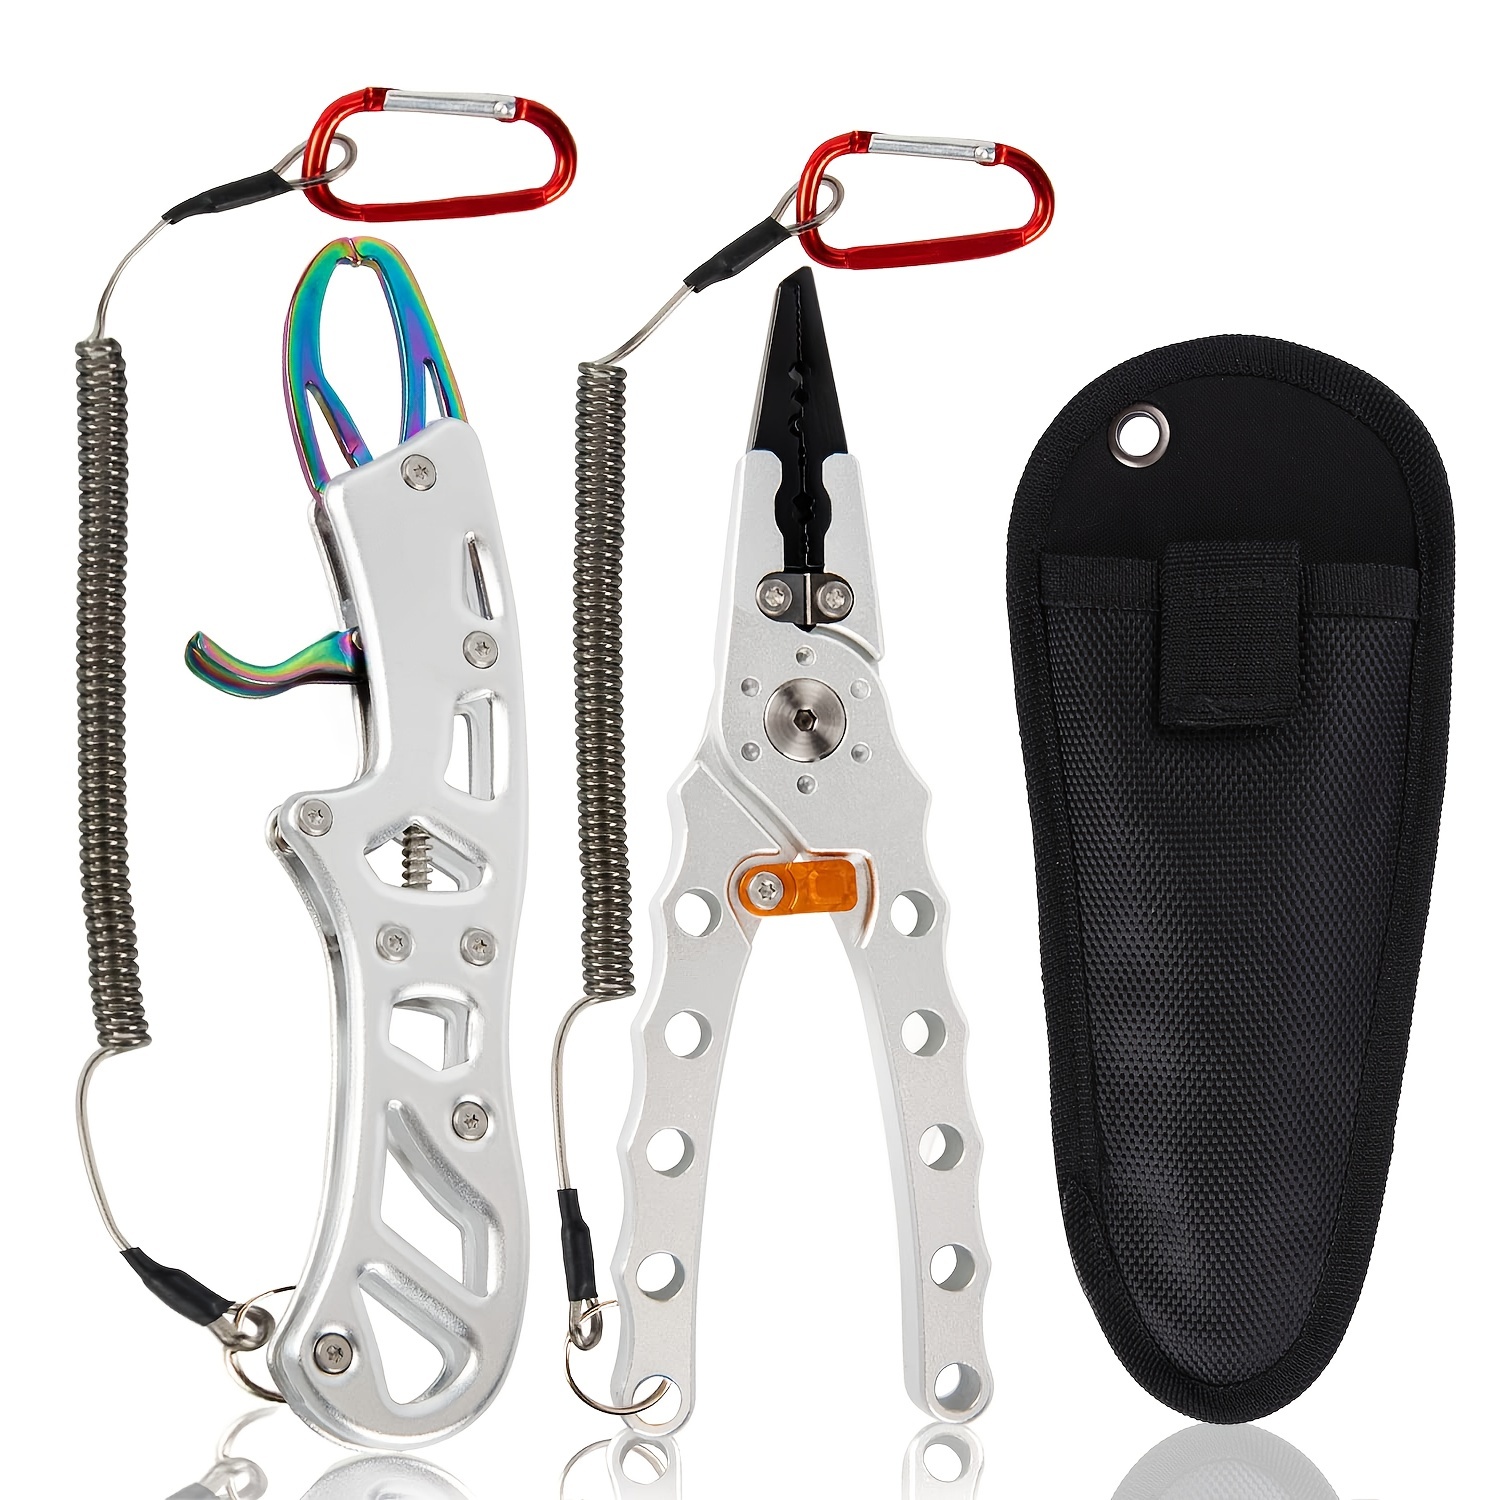 Fishing Pliers, Fishing Line Scissors, Water-Resistant Fish Lip